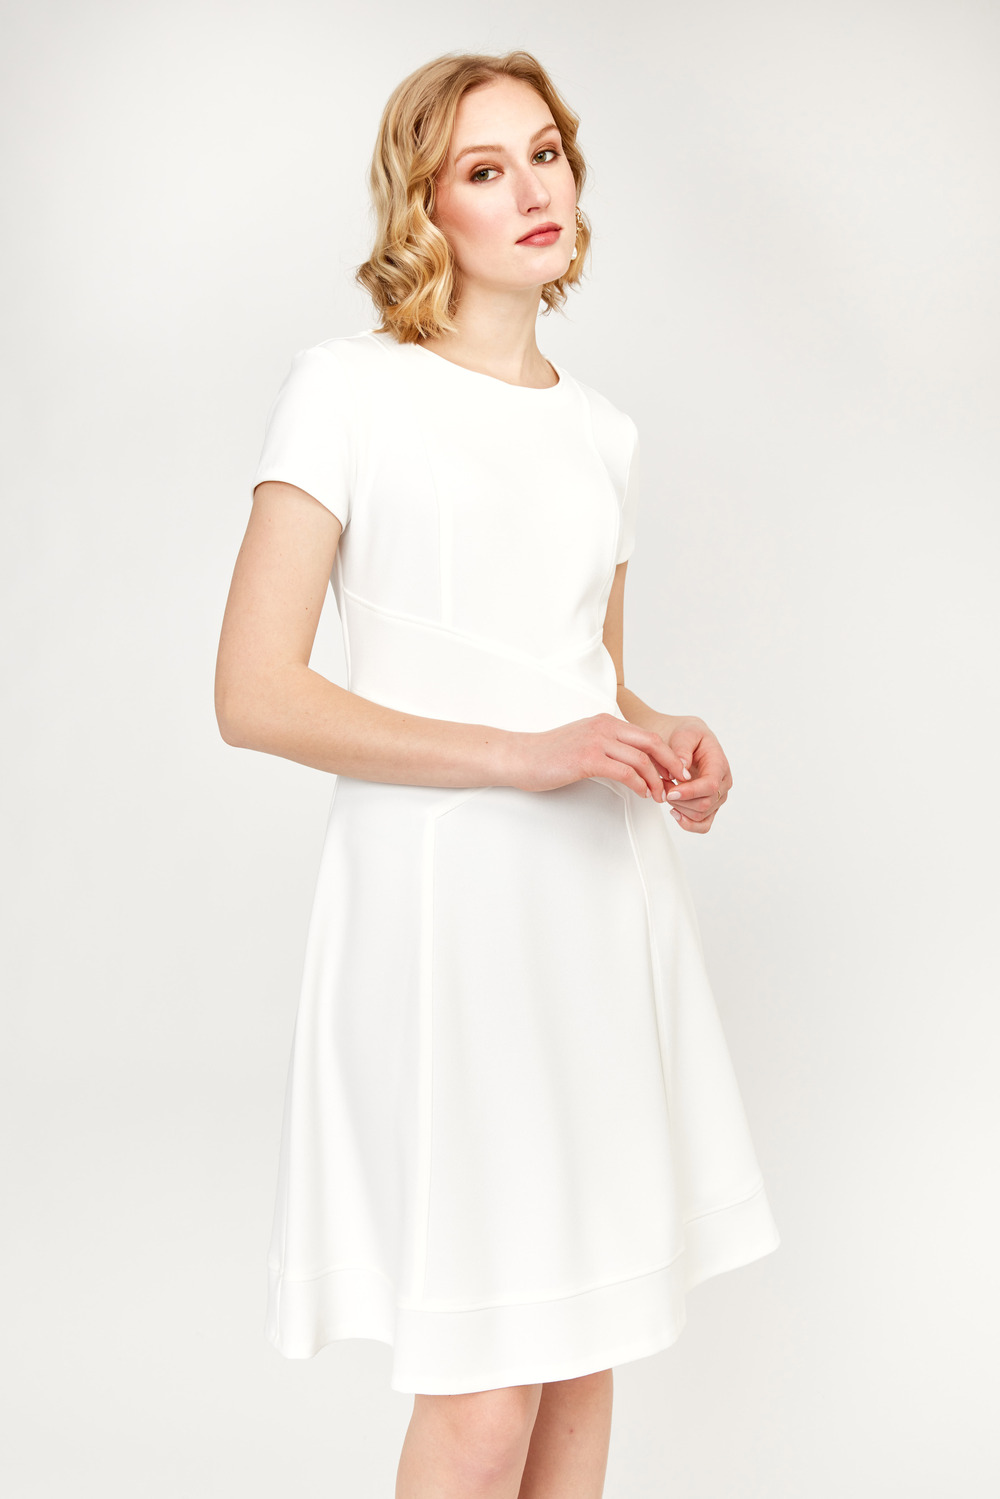 Short Sleeve Fit & Flare Dress Style 232106. Vanilla